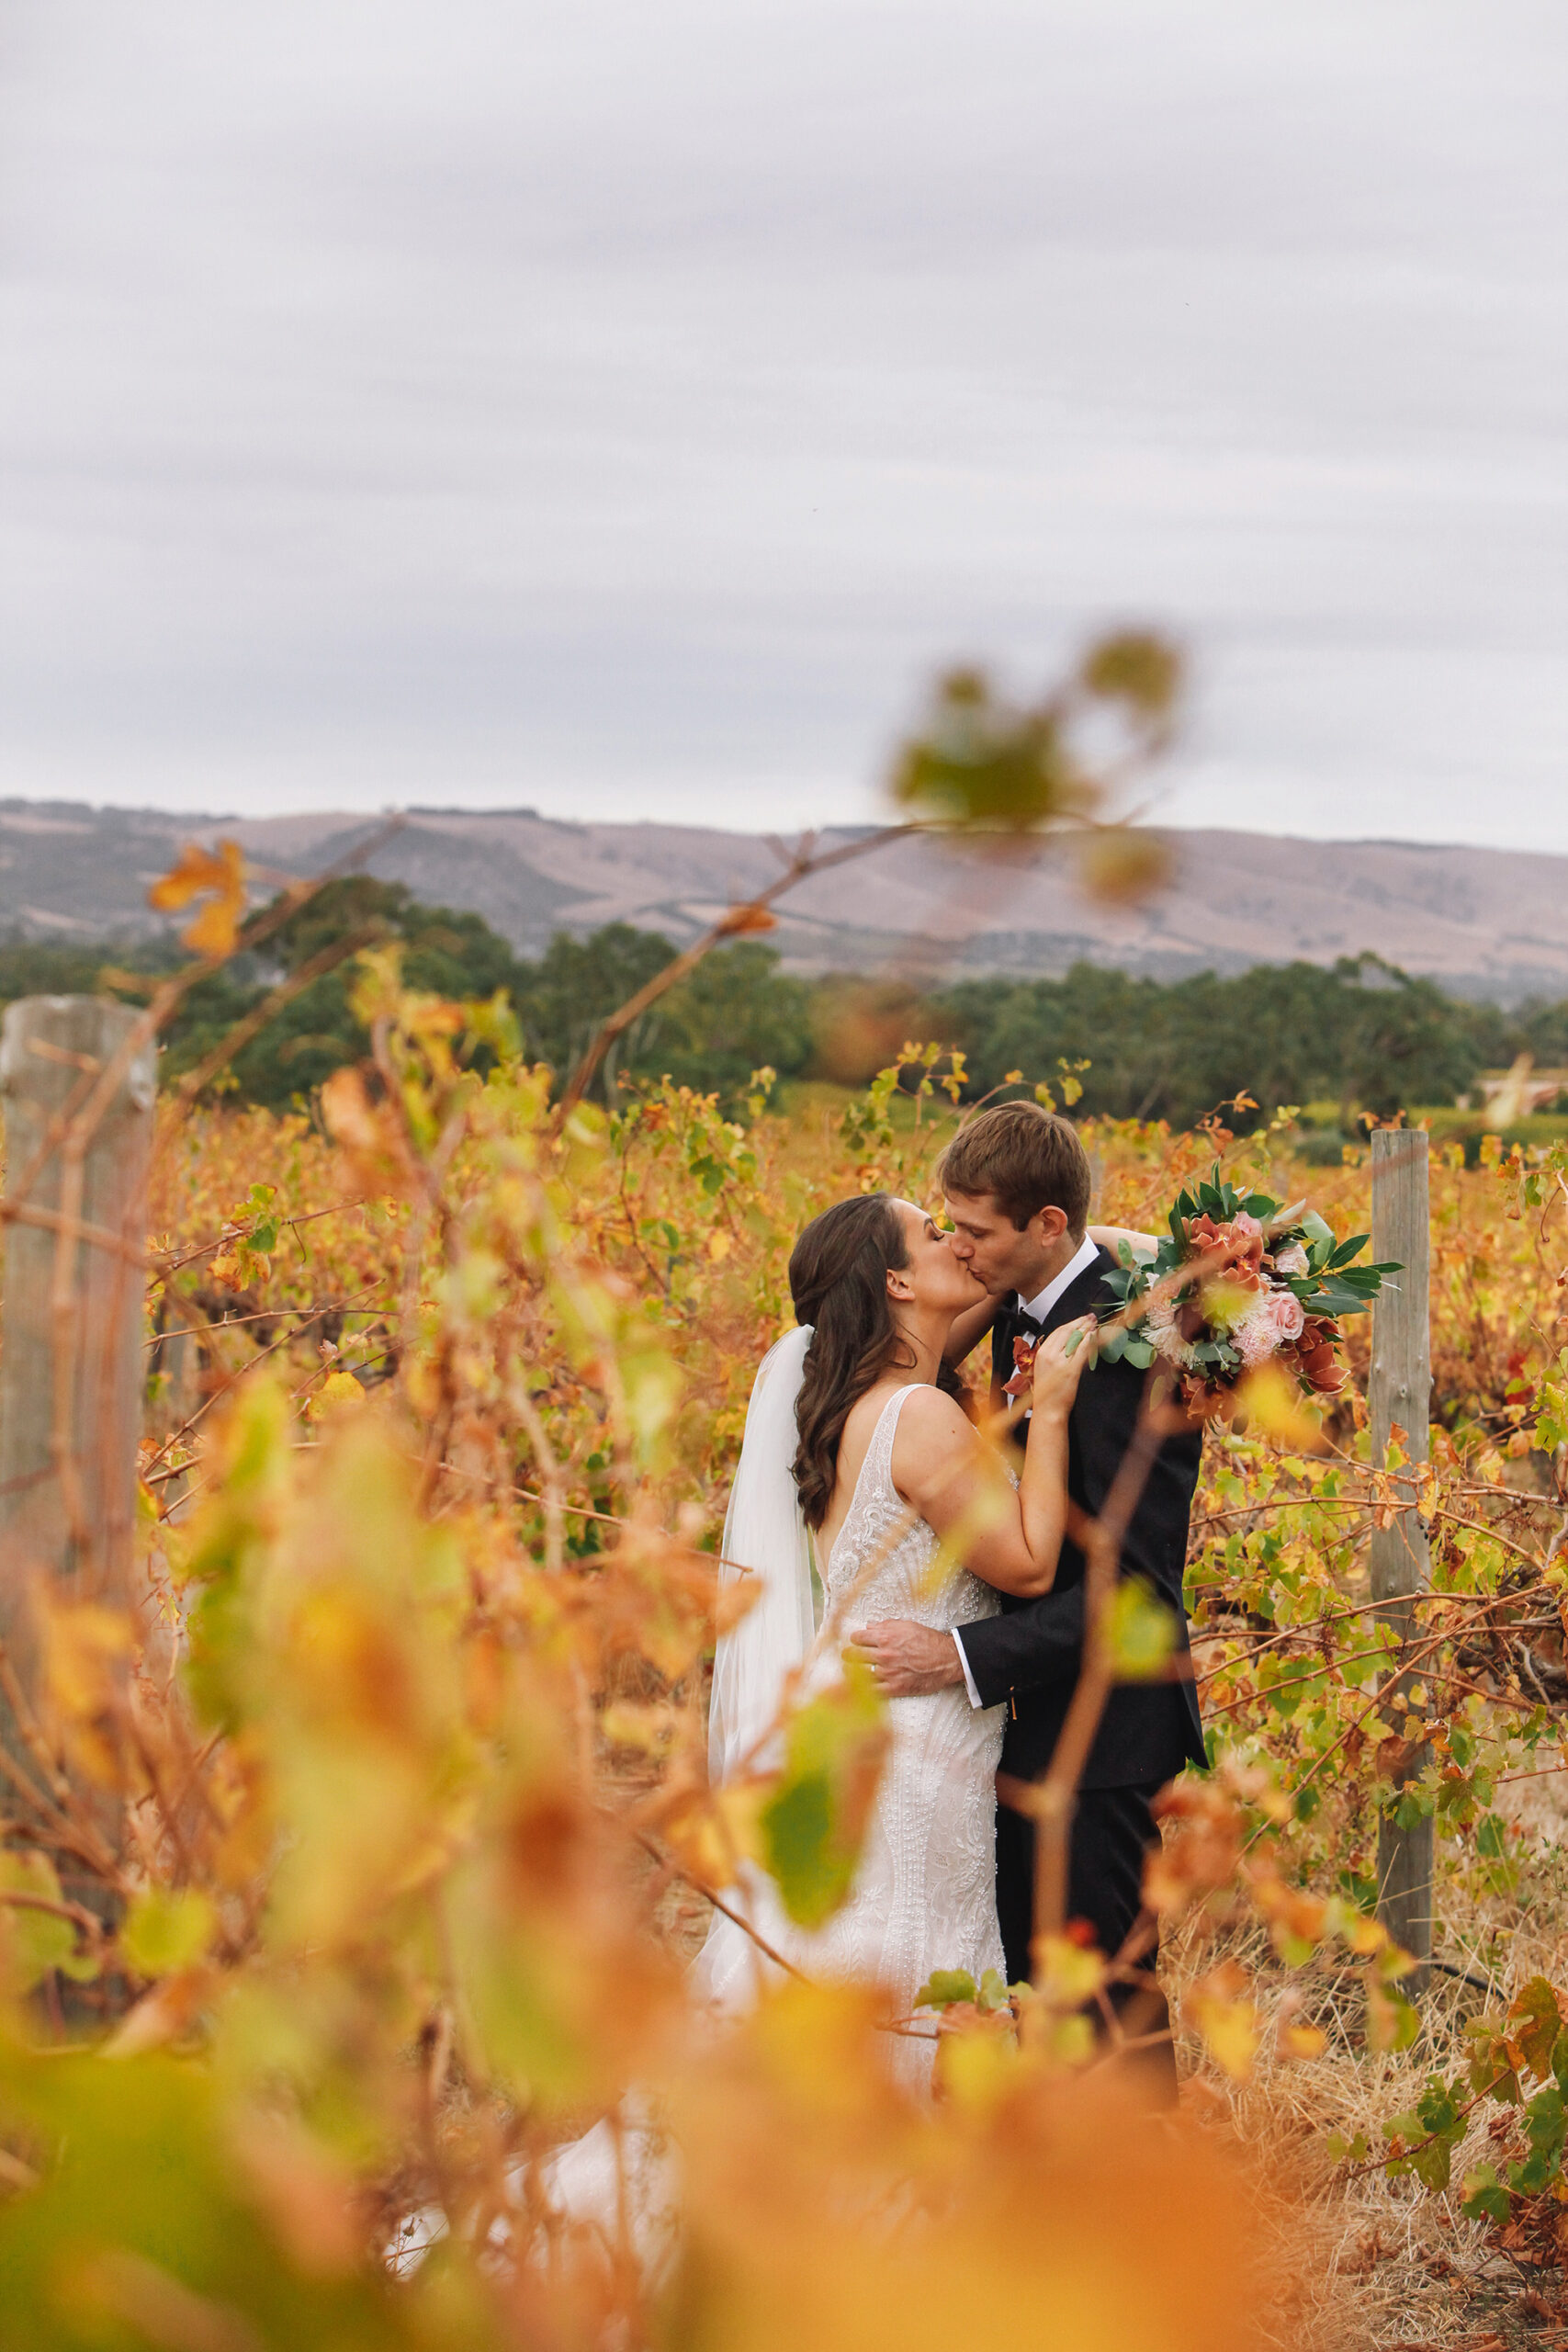 Kathryn Zyggy Rustic Winery Wedding Panache Photography SBS 025 scaled